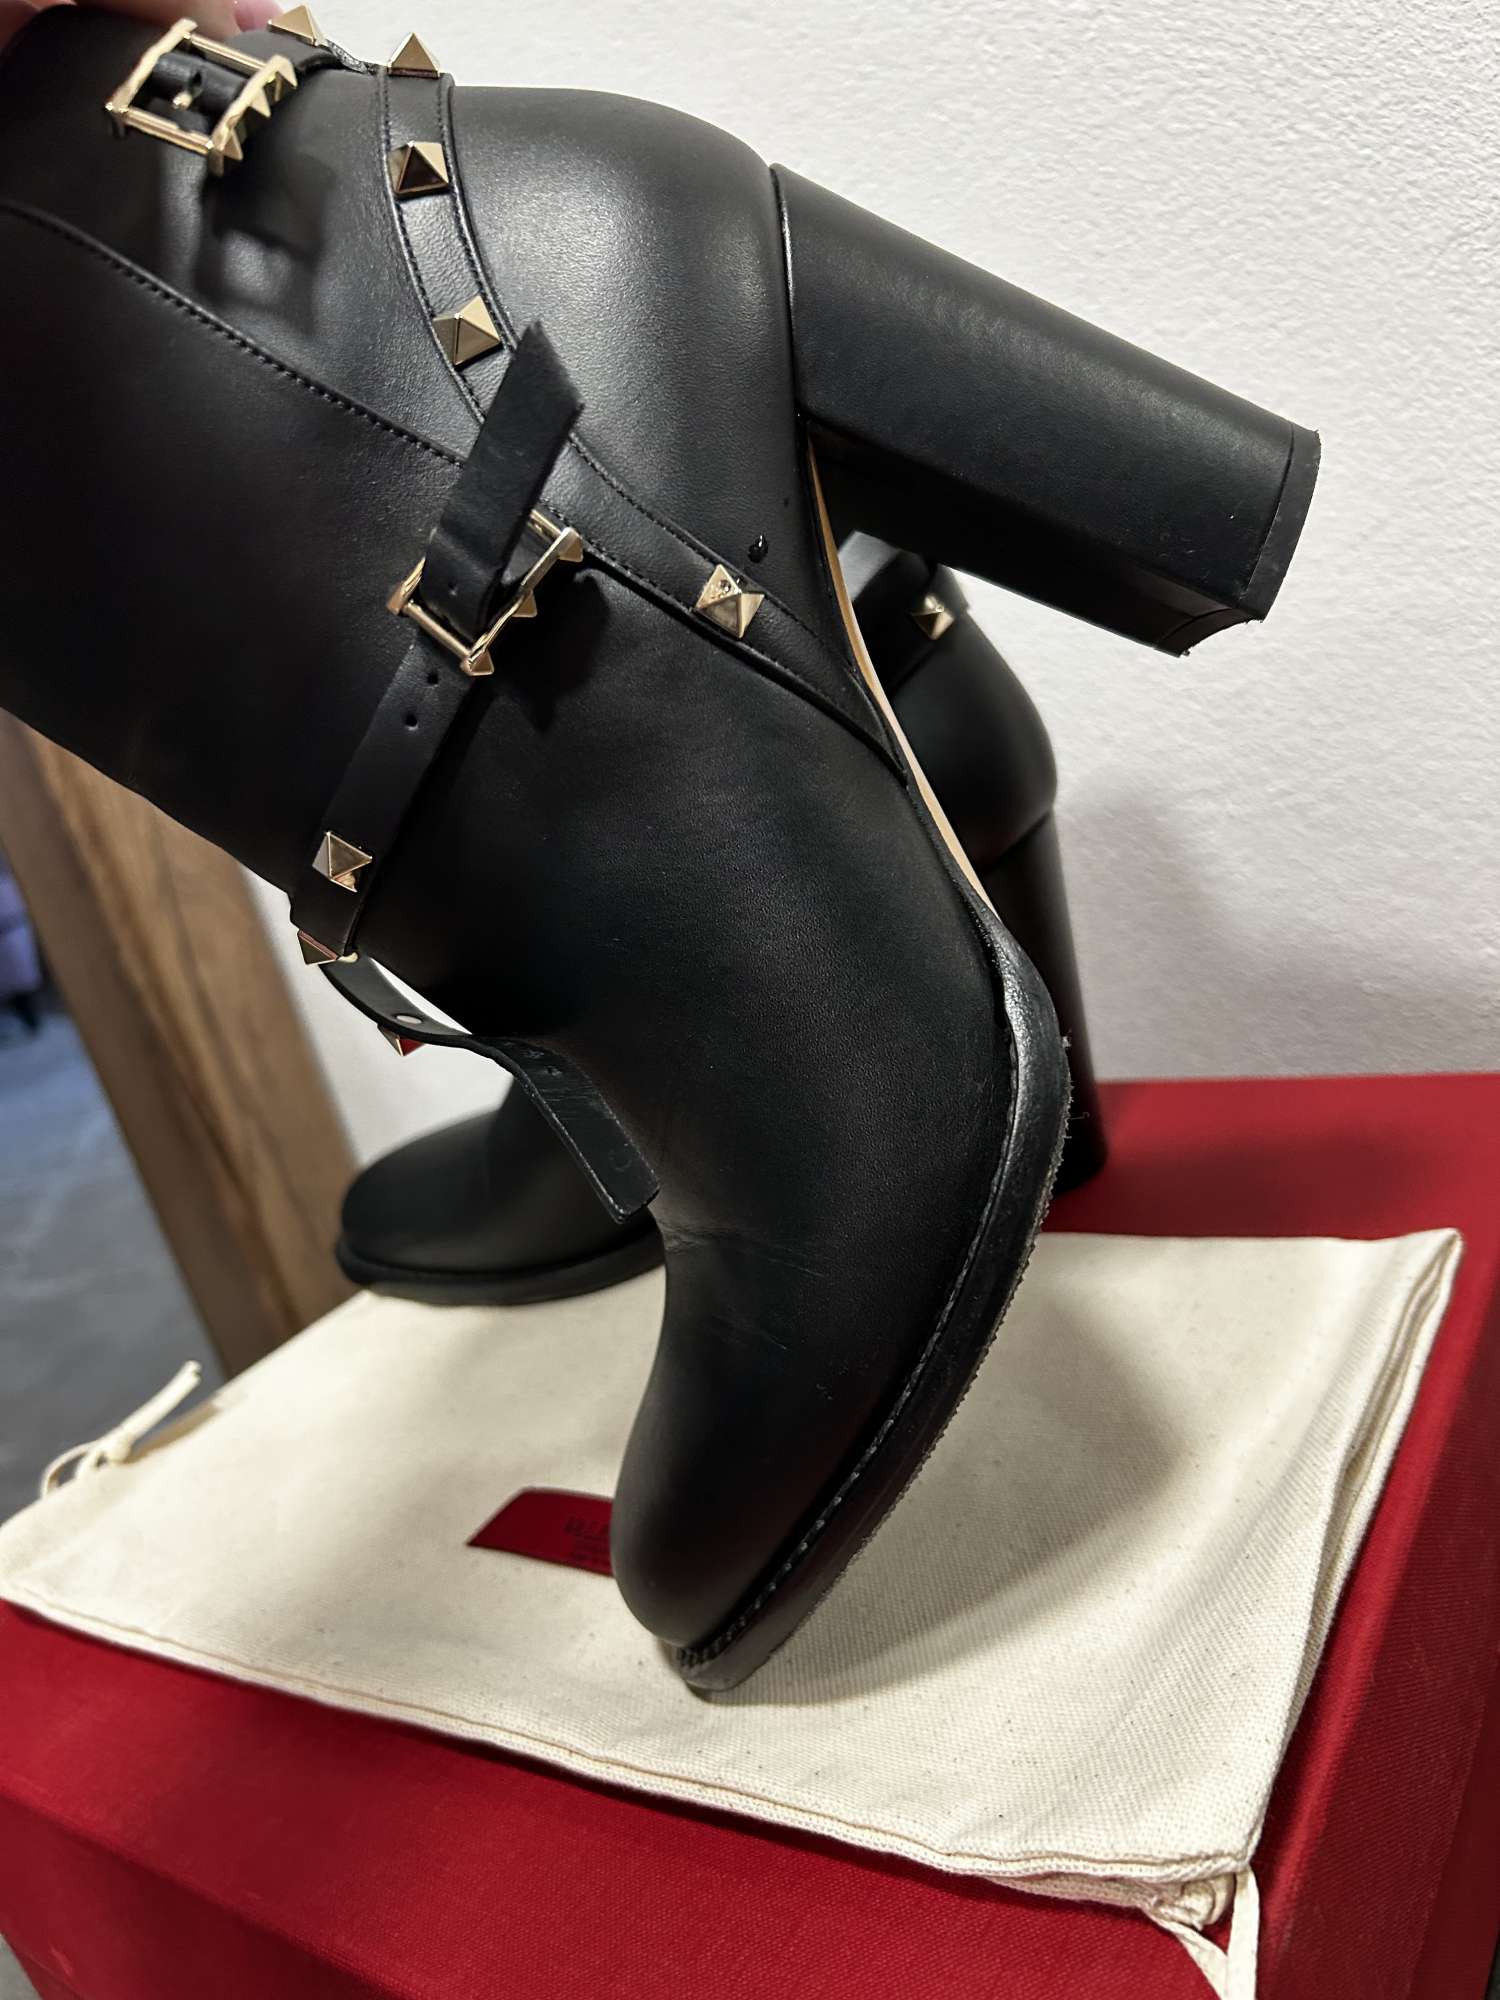 Valentino Caravani ankle boots